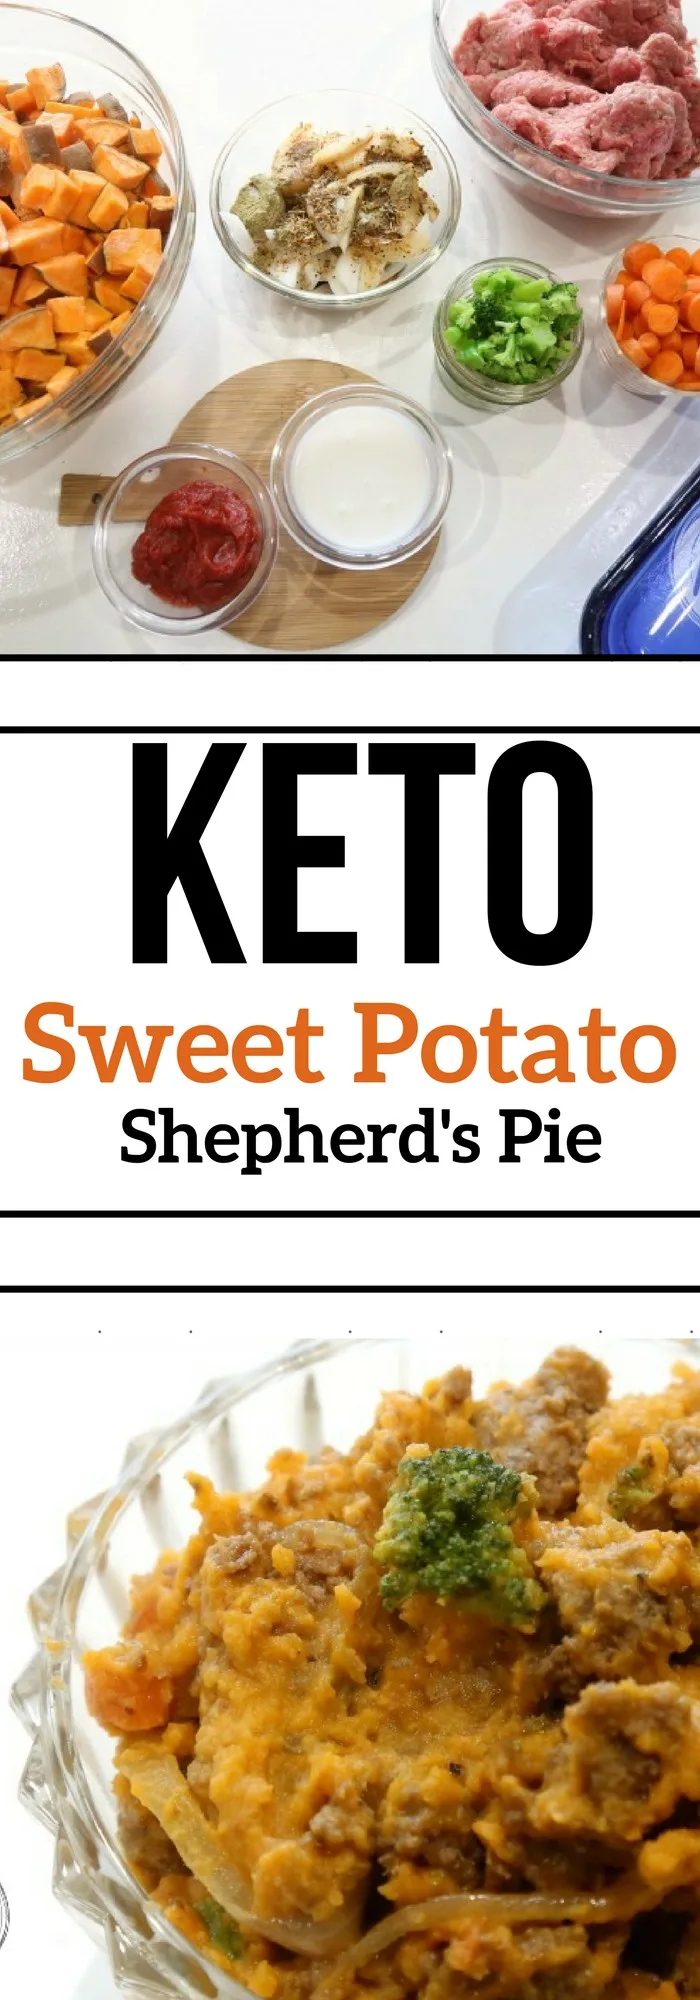 Keto Low Carb High Fat Baked Shepherd's Pie Recipe